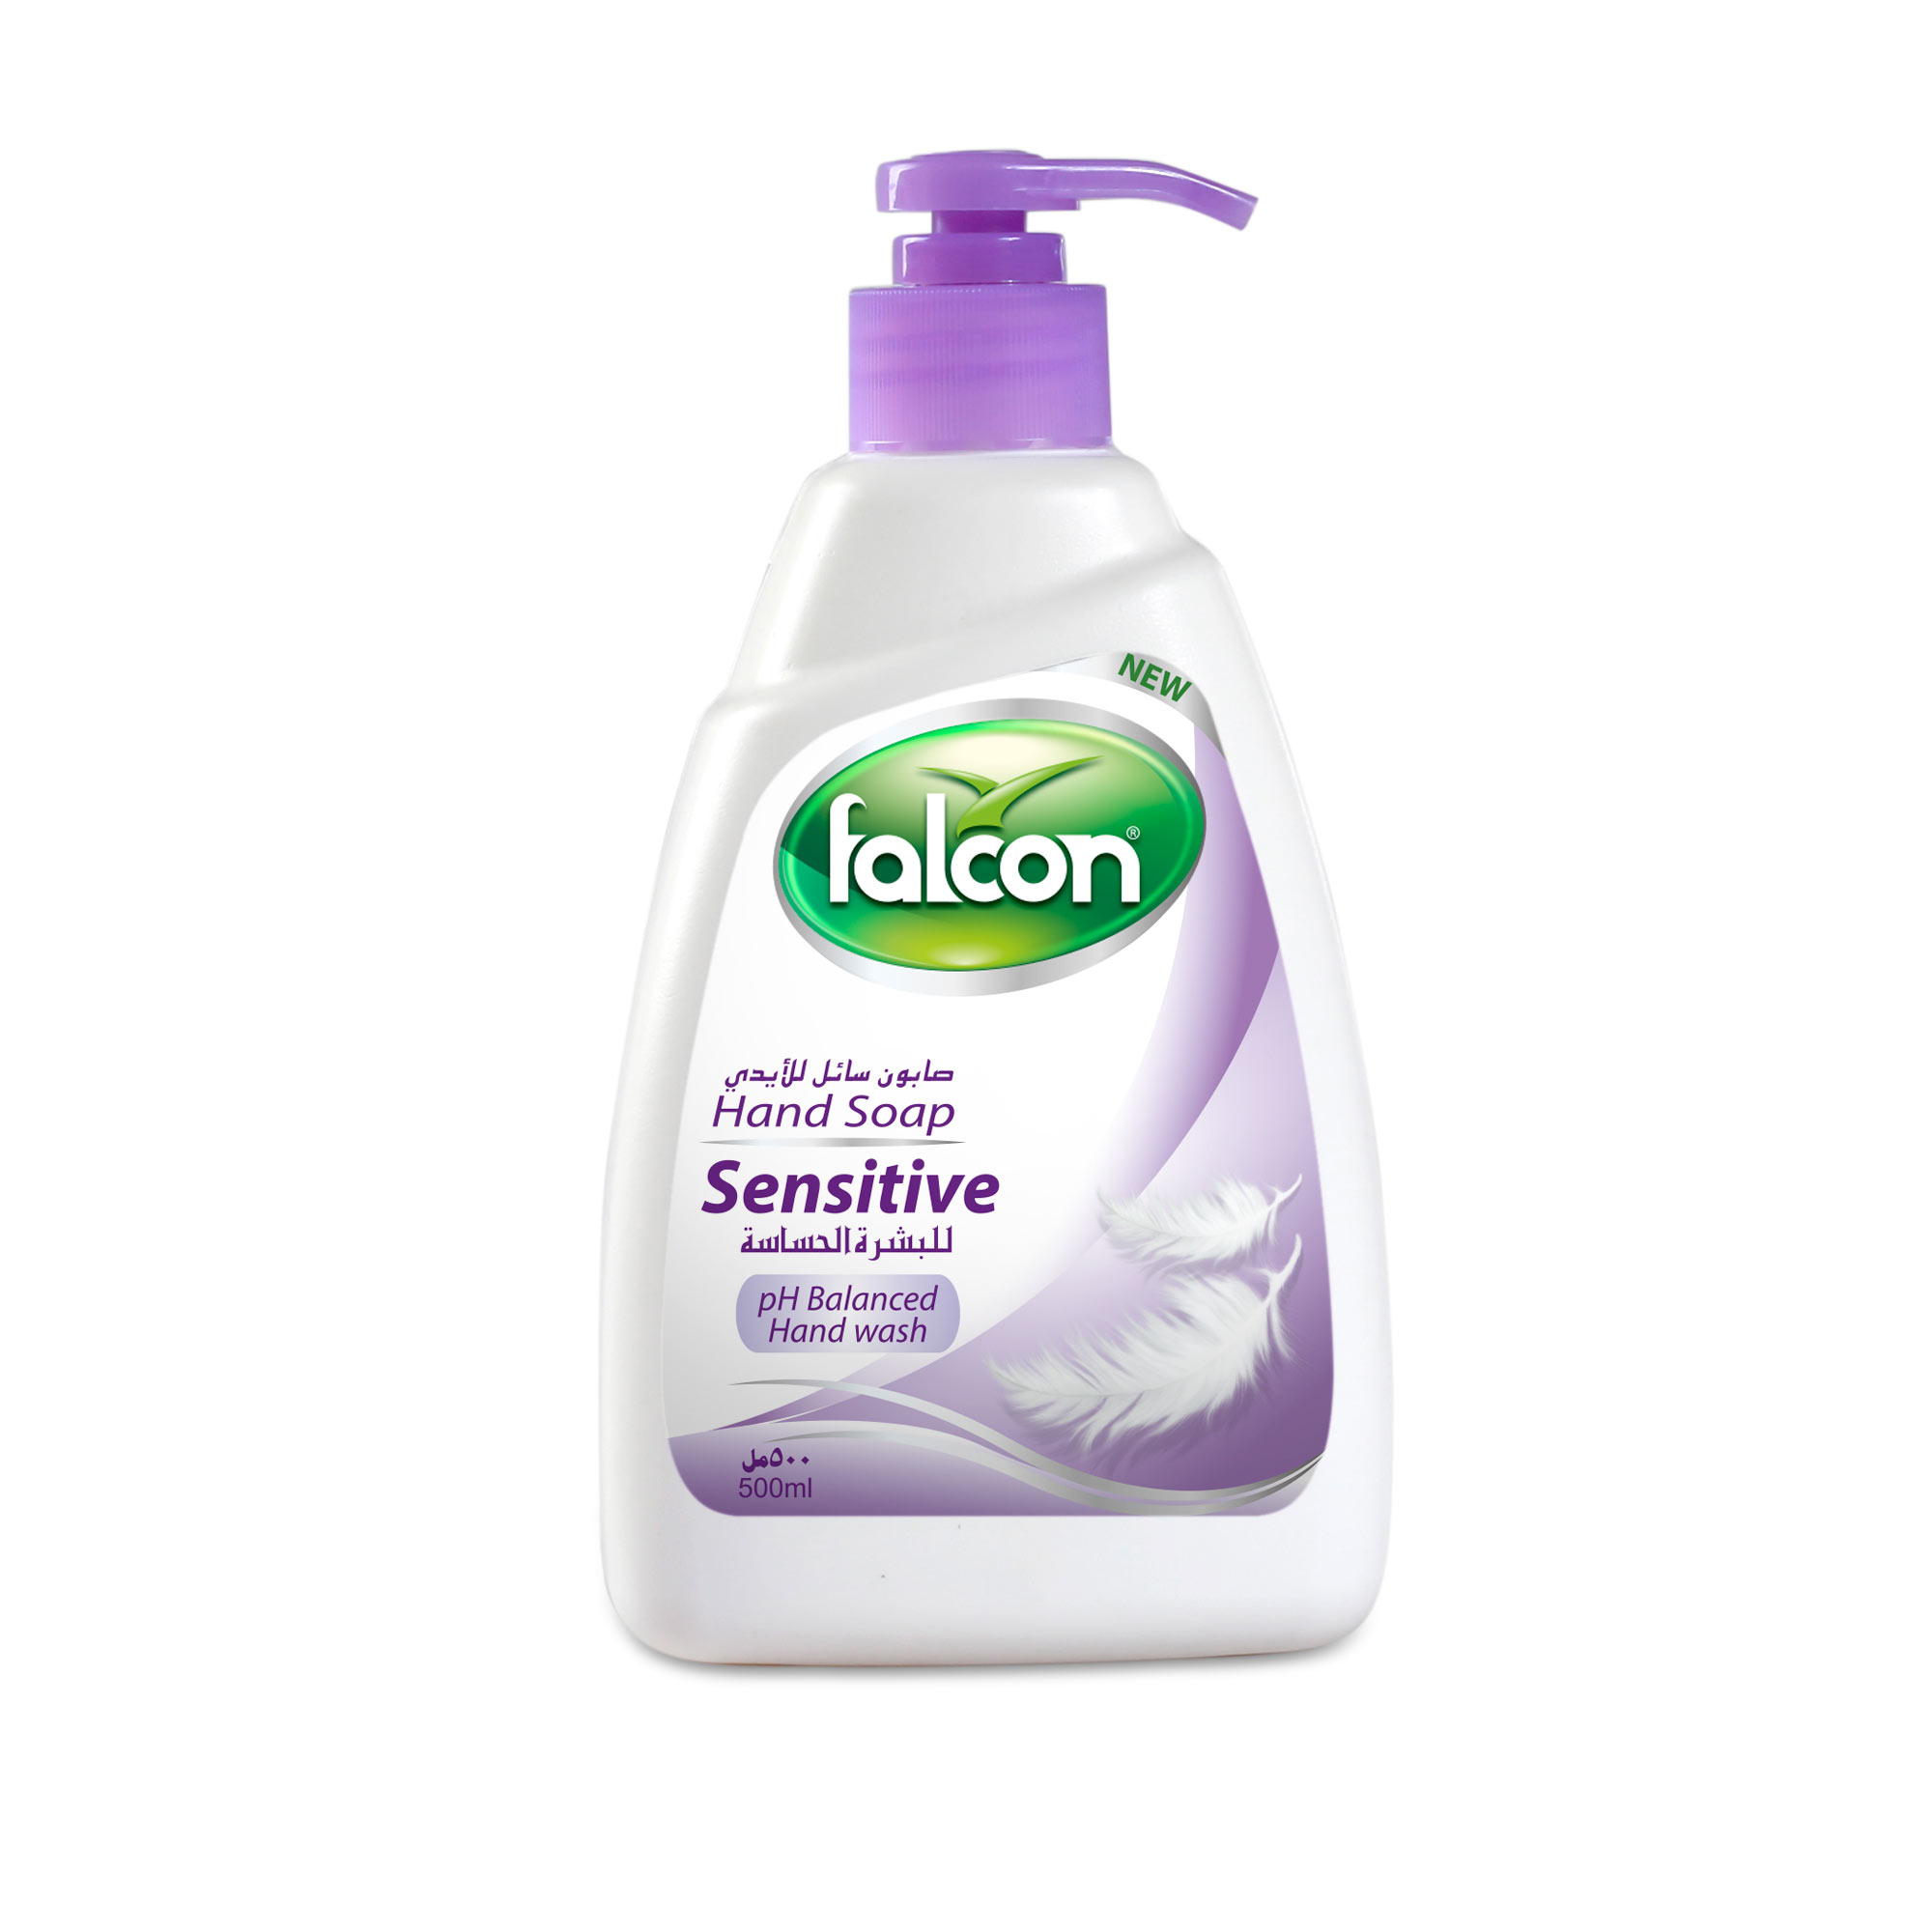 Falcon Natural Hand Soap Liquid (Sensitive, 500 ml Bottle)